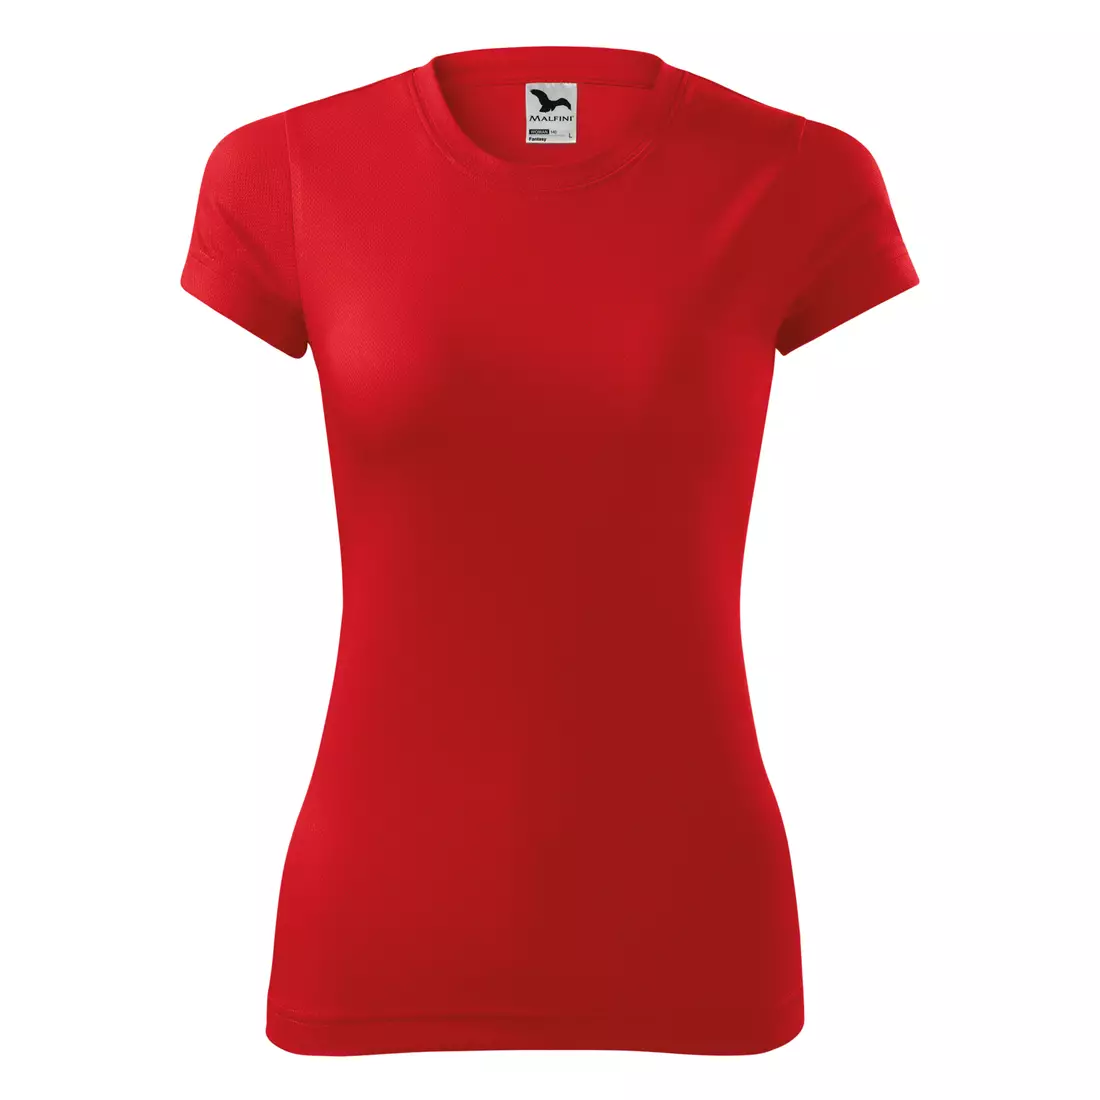 ALFINI FANTASY - Women's Sports T-Shirt 100% Polyester, Red 1400712-140